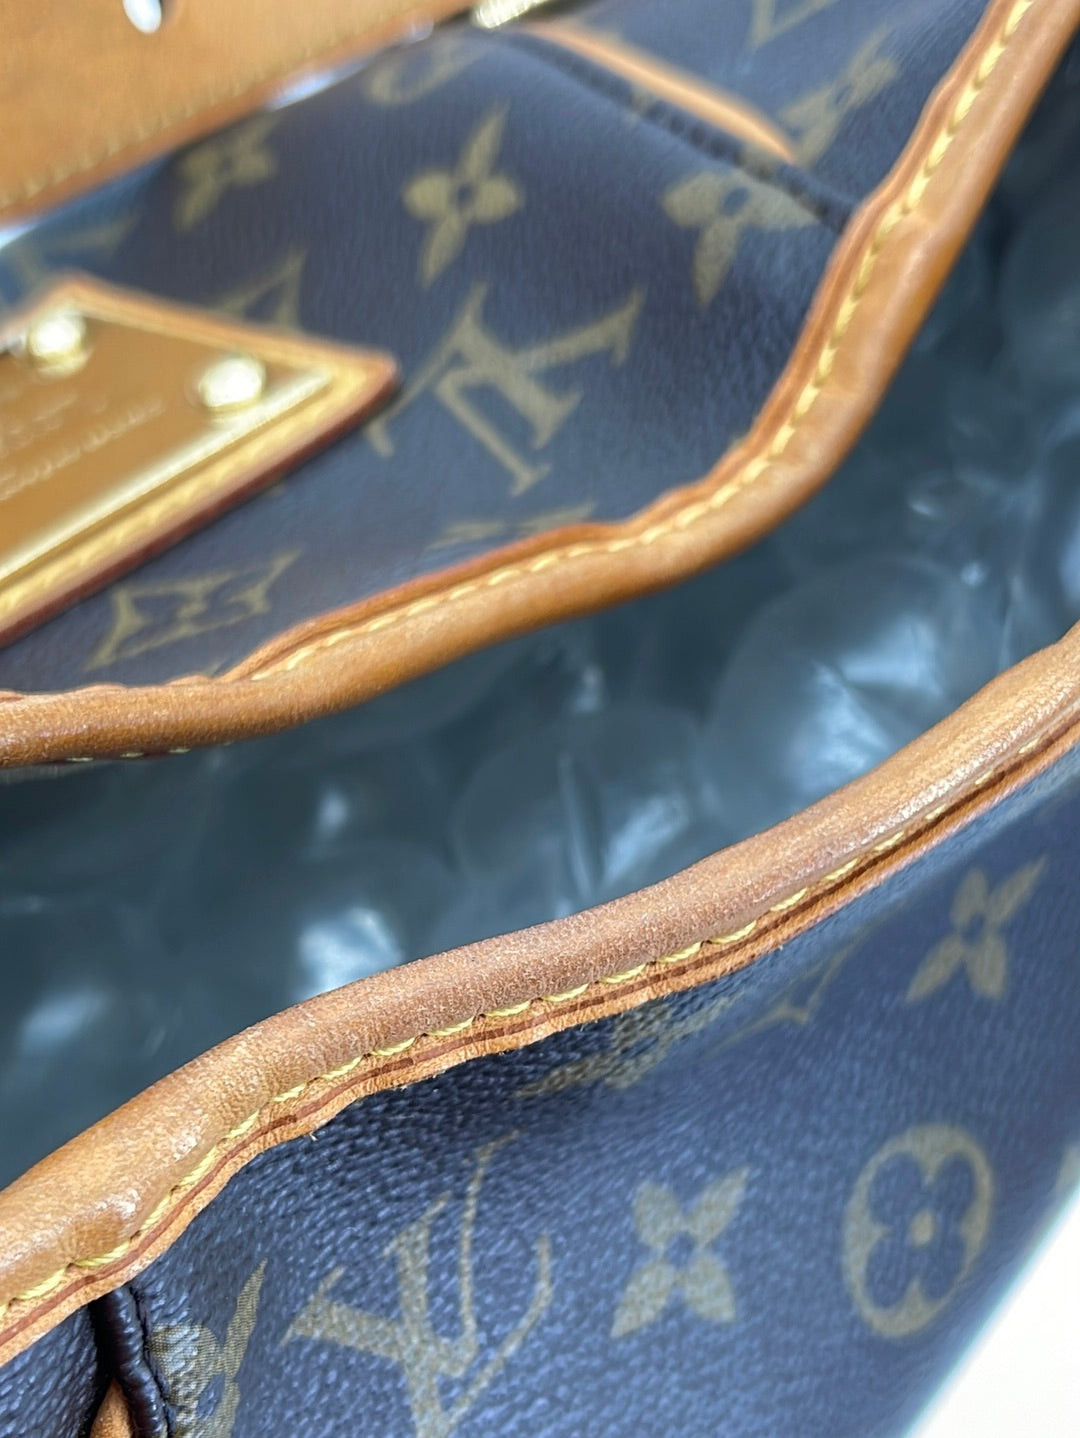 Louis Vuitton ~ SOLD ~ monogram Galleria PM ~ authentic only!! . . . . . .  #louisvuitton #lvgalliera #lvpreloved #lvbag #lv #lvworld…